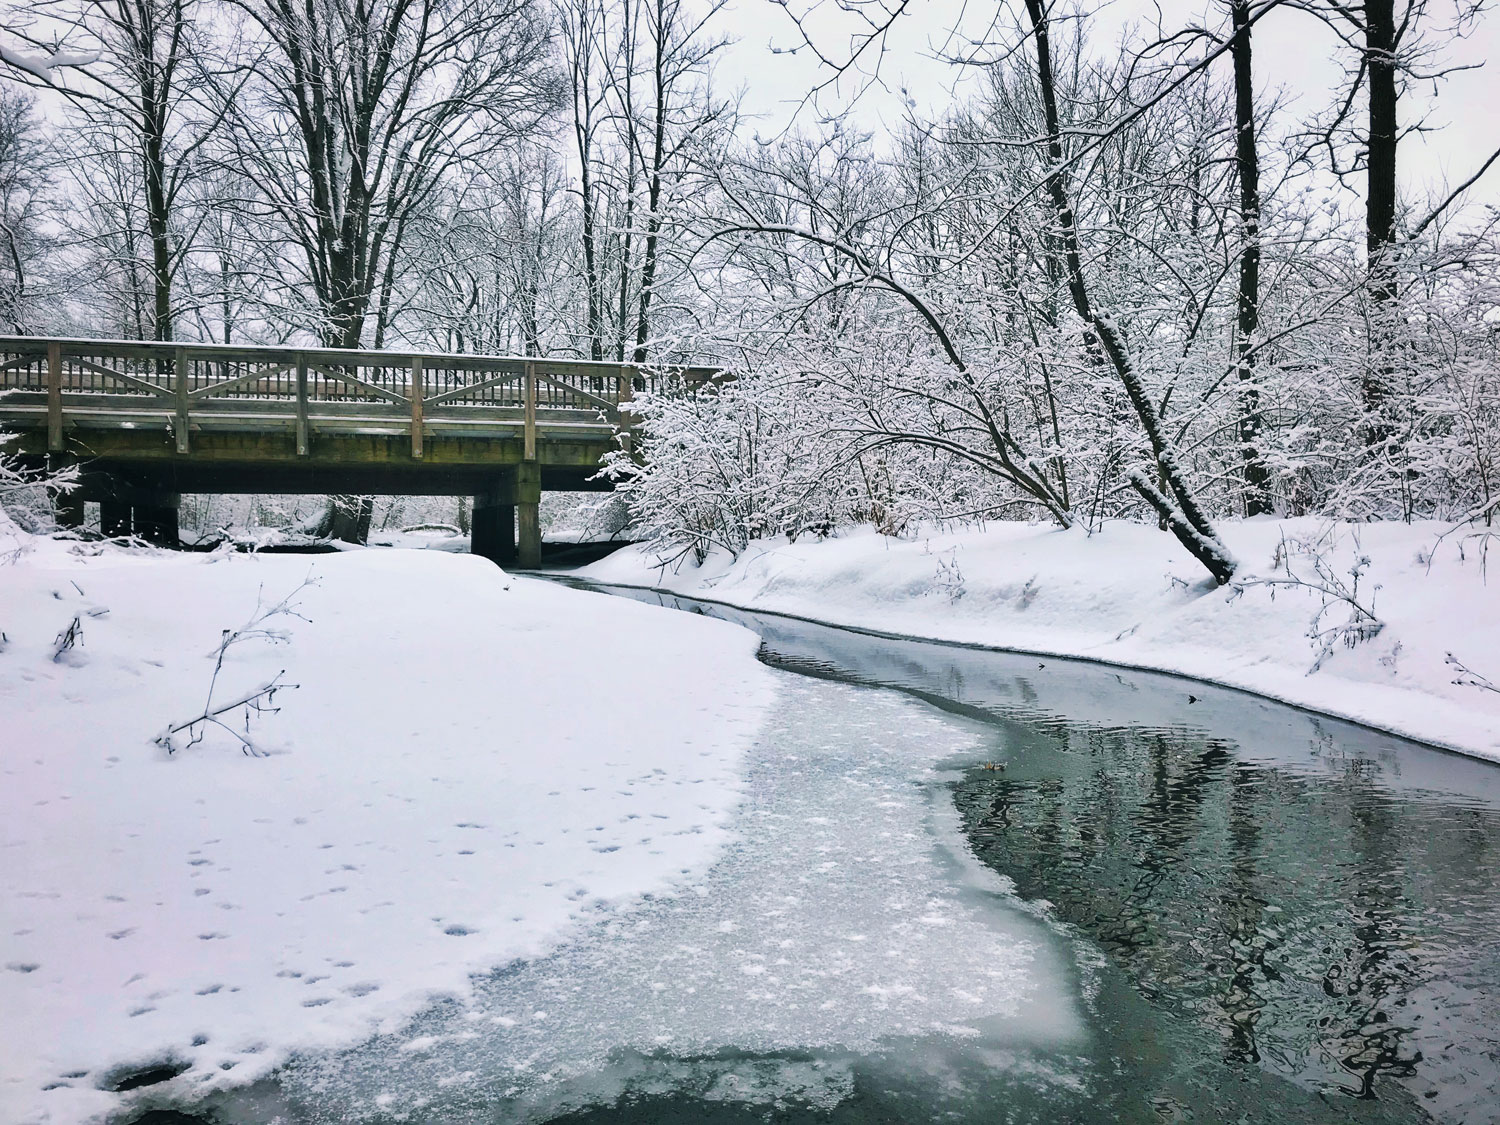 A partially frozen stream in a snowy landscape.